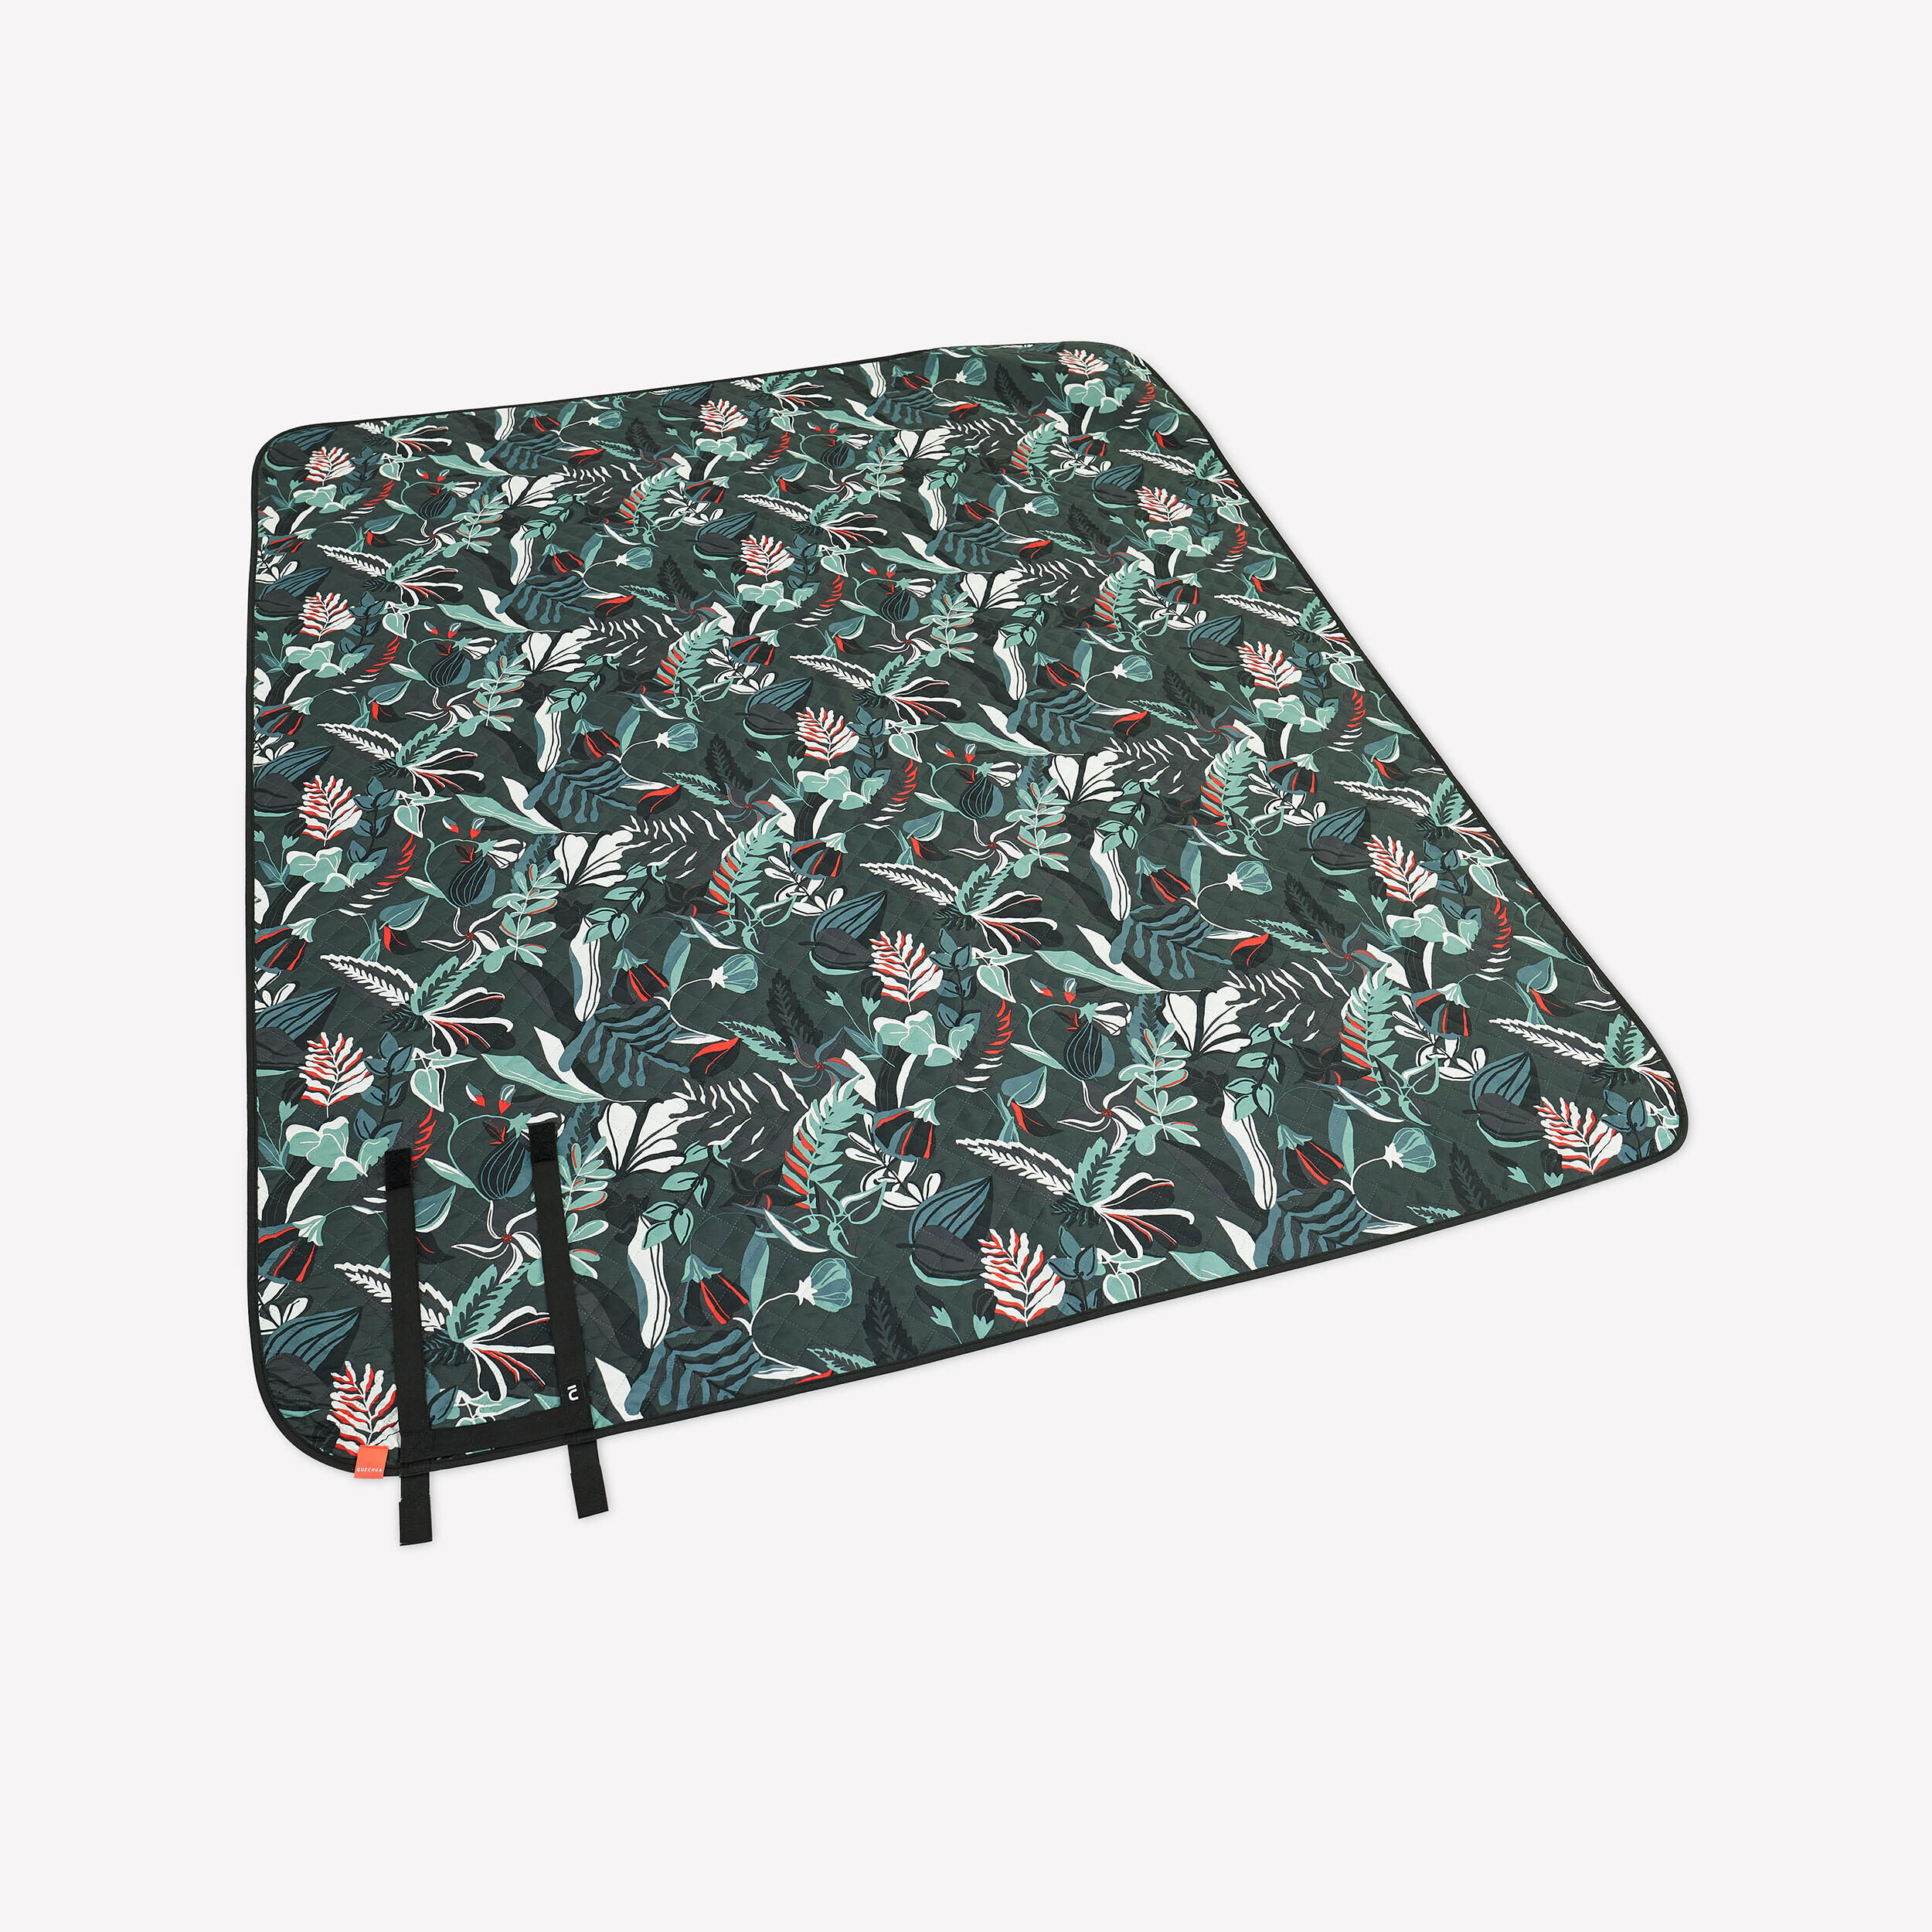 QUECHUA Comfort blanket for picnics and camping - 170 x 140 cm